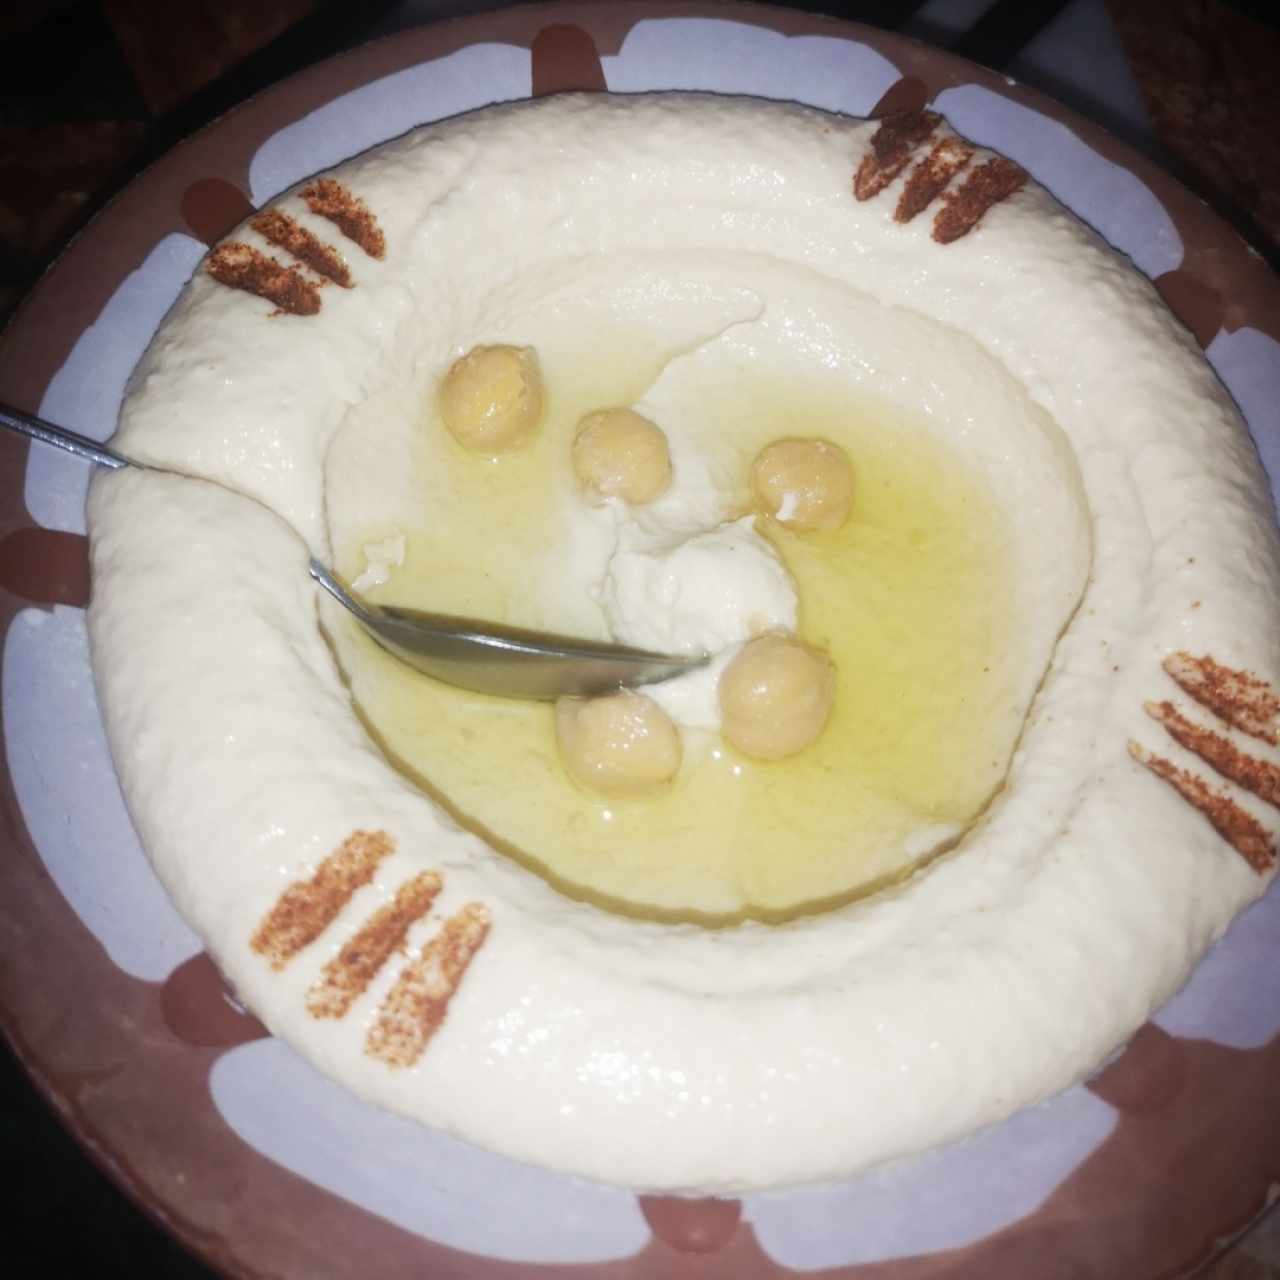 Entradas Libanesas - Hummus